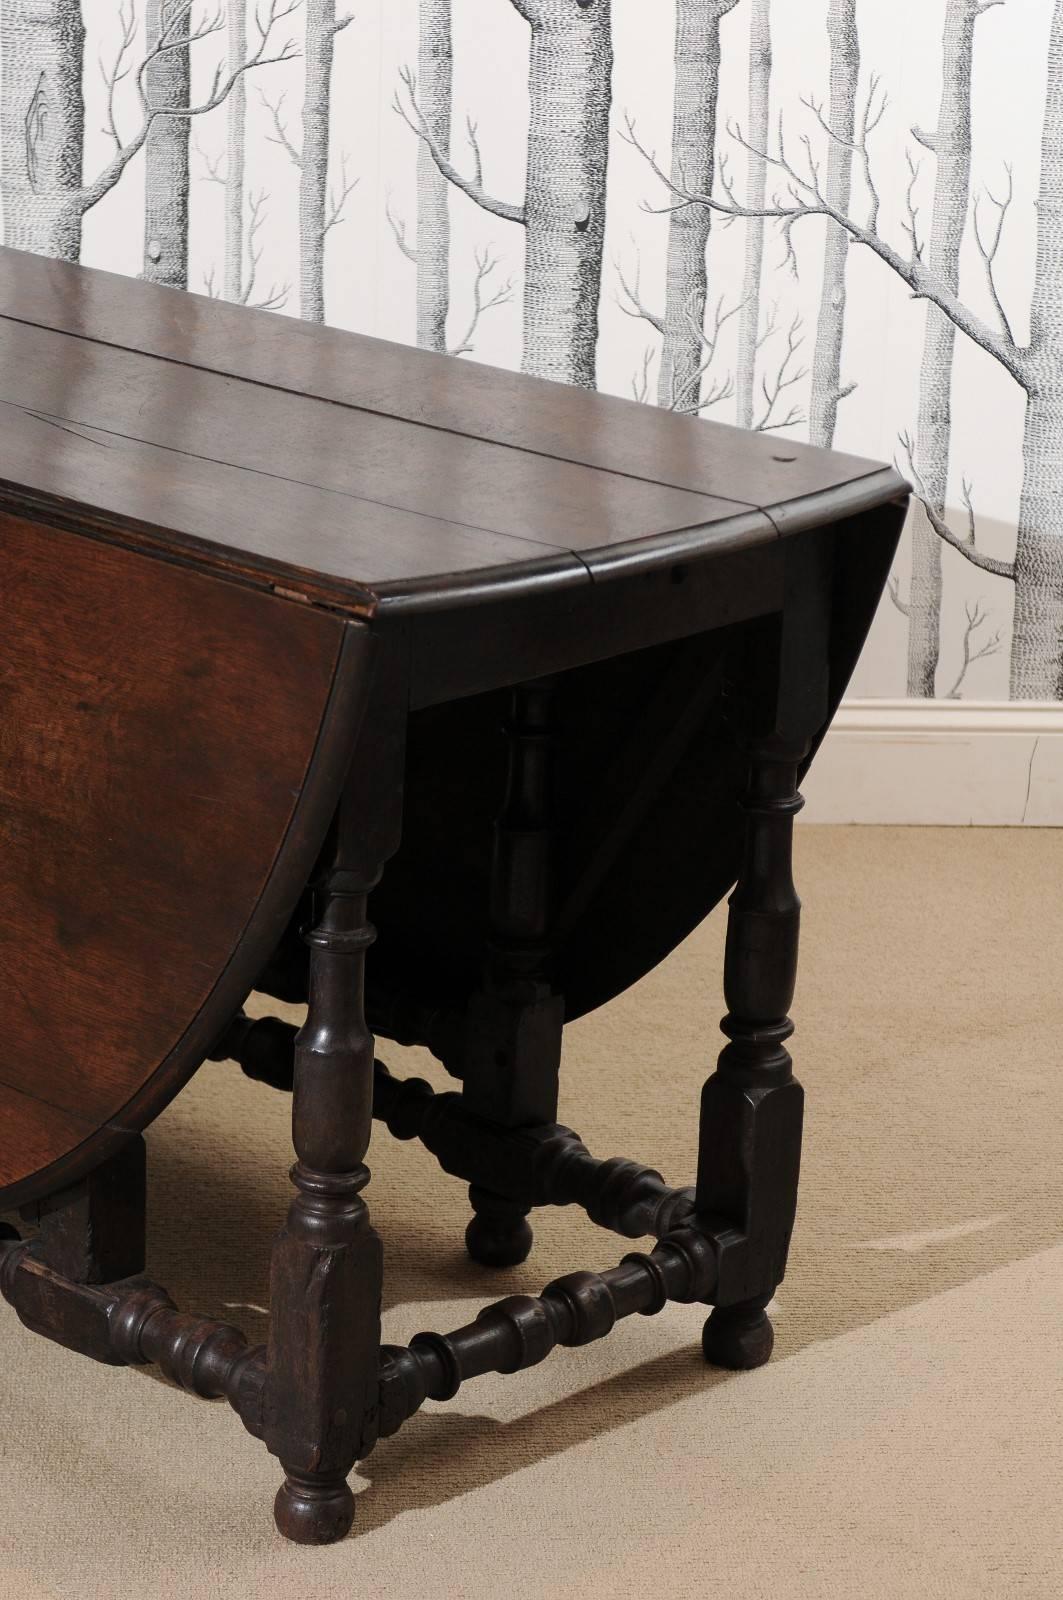 English Oak Oval Gateleg Table, Dark Finish, Good Condition, circa 1860 For Sale 4